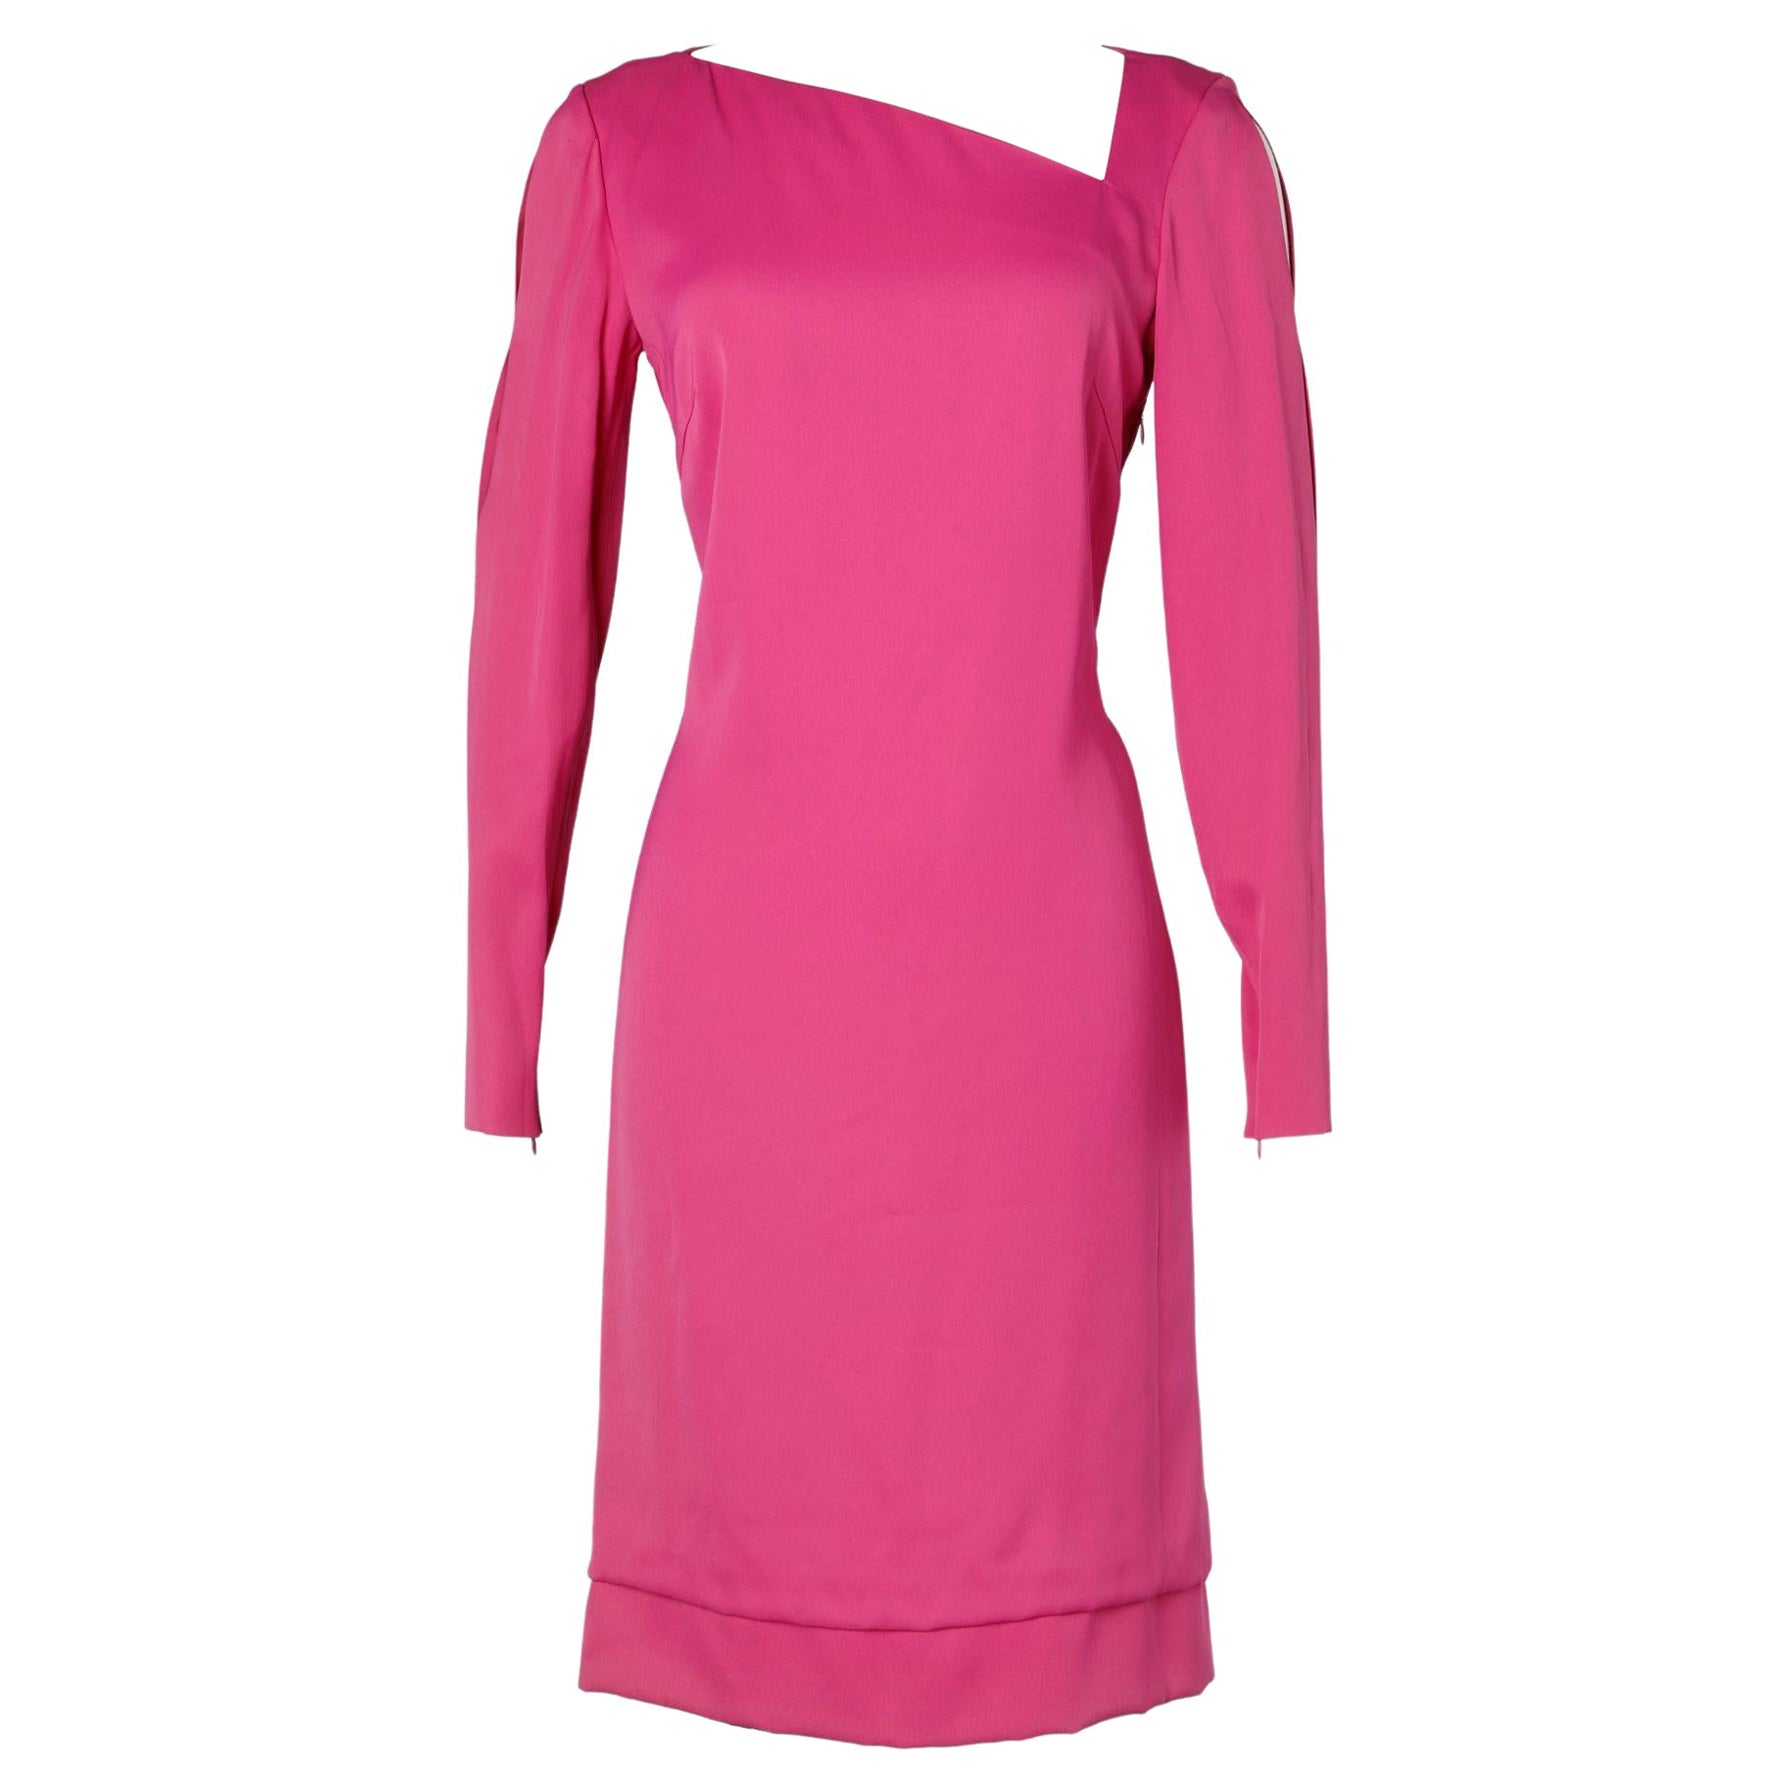 Pink asymmetrical collar dress Lindsey  Lohan for Ungaro